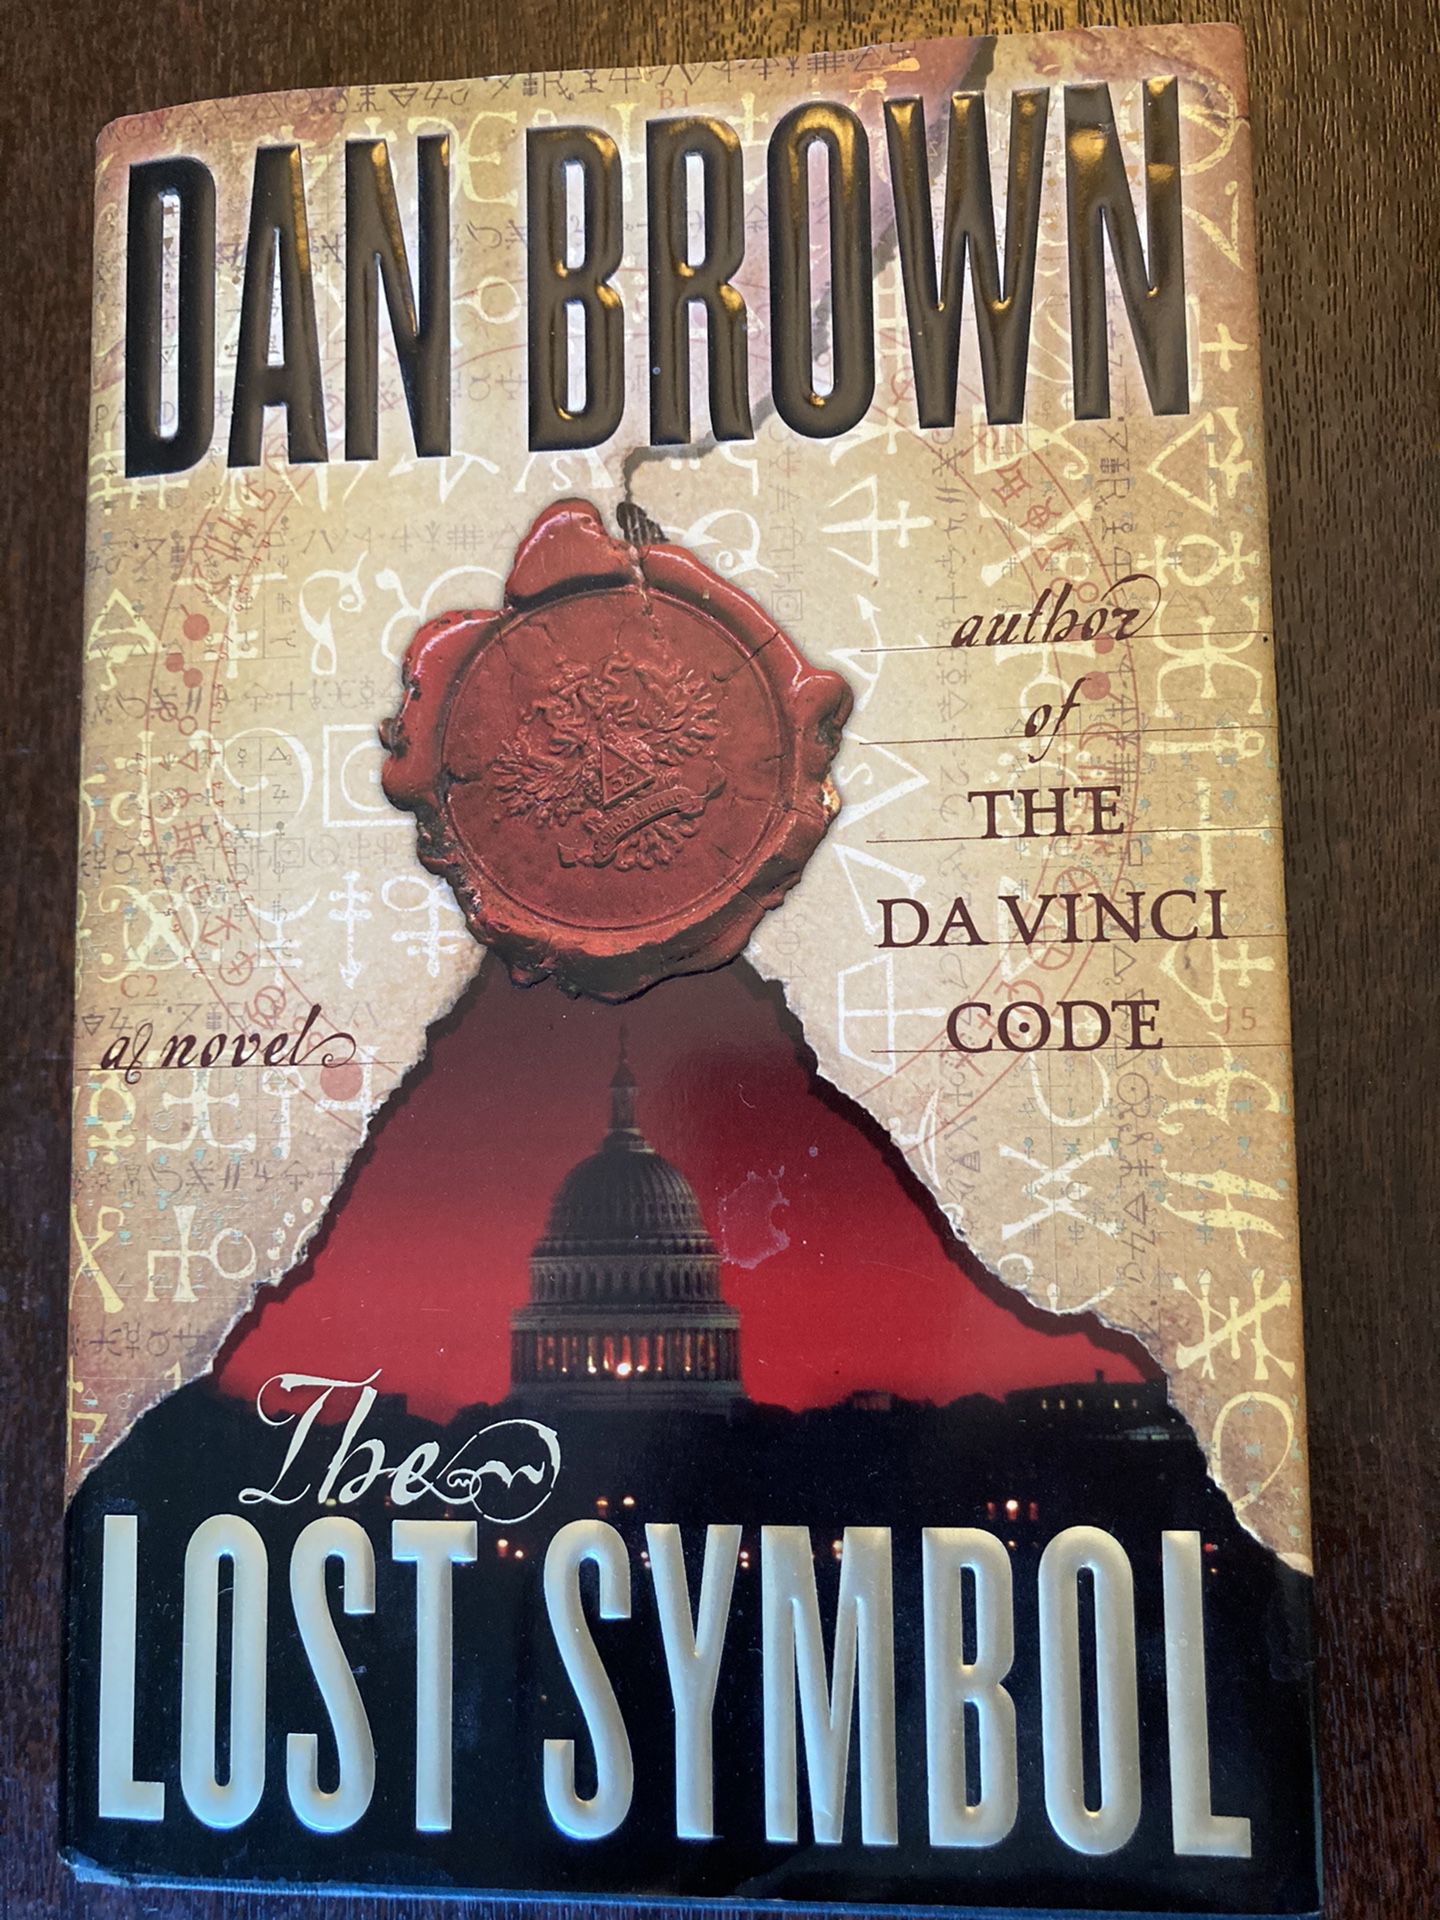 The Lost Symbol - by Dan Brown, Author of The Da Vinci Code